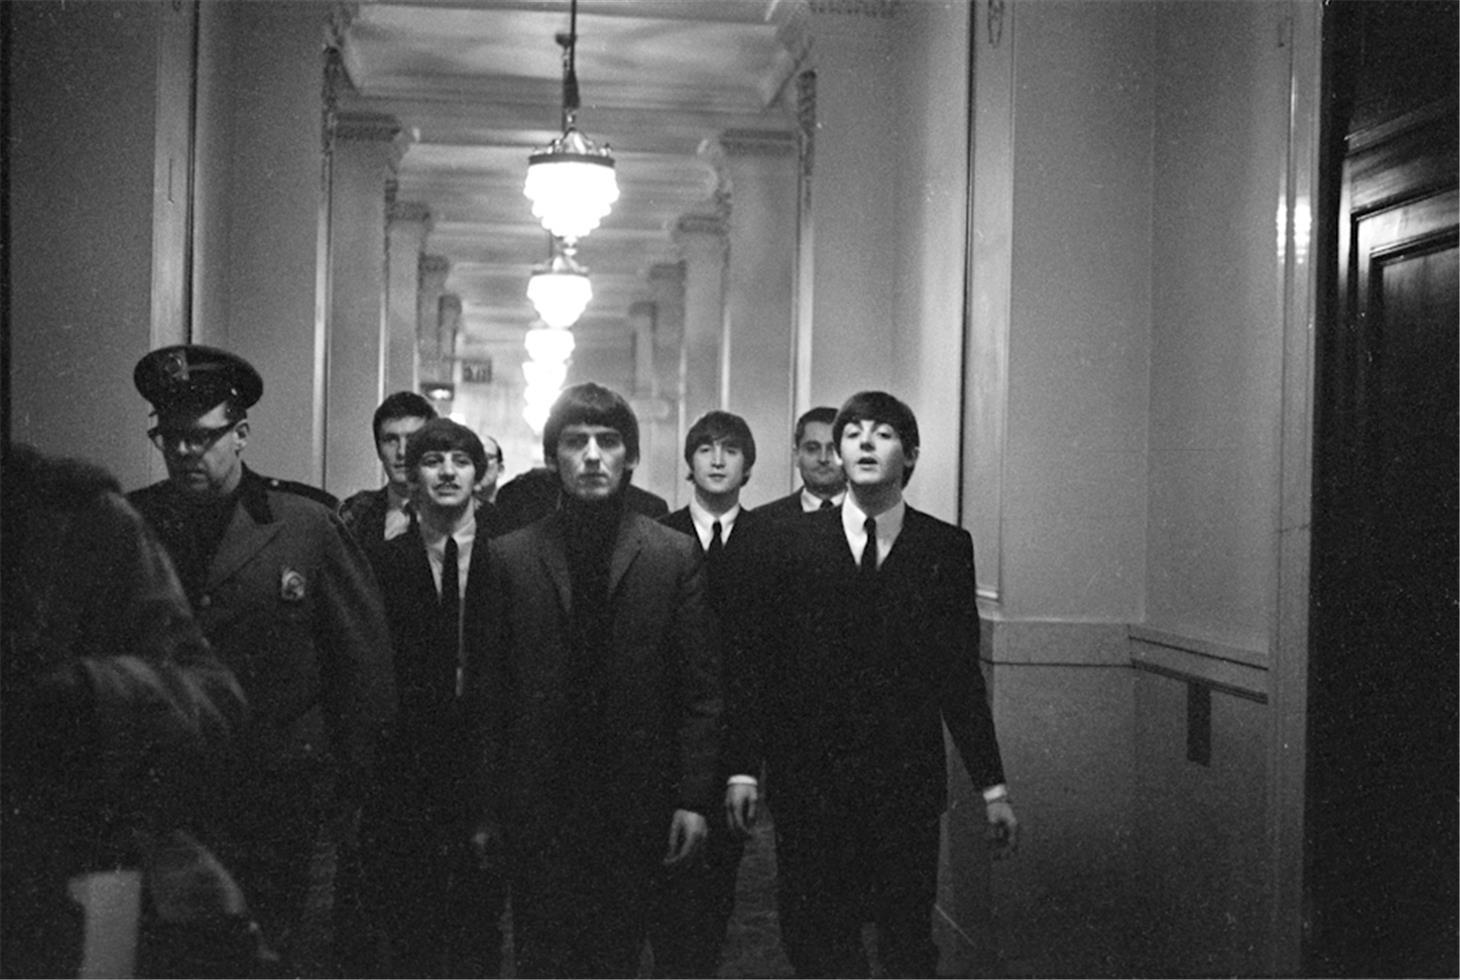 Ken Regan Black and White Photograph - The Beatles, 1965